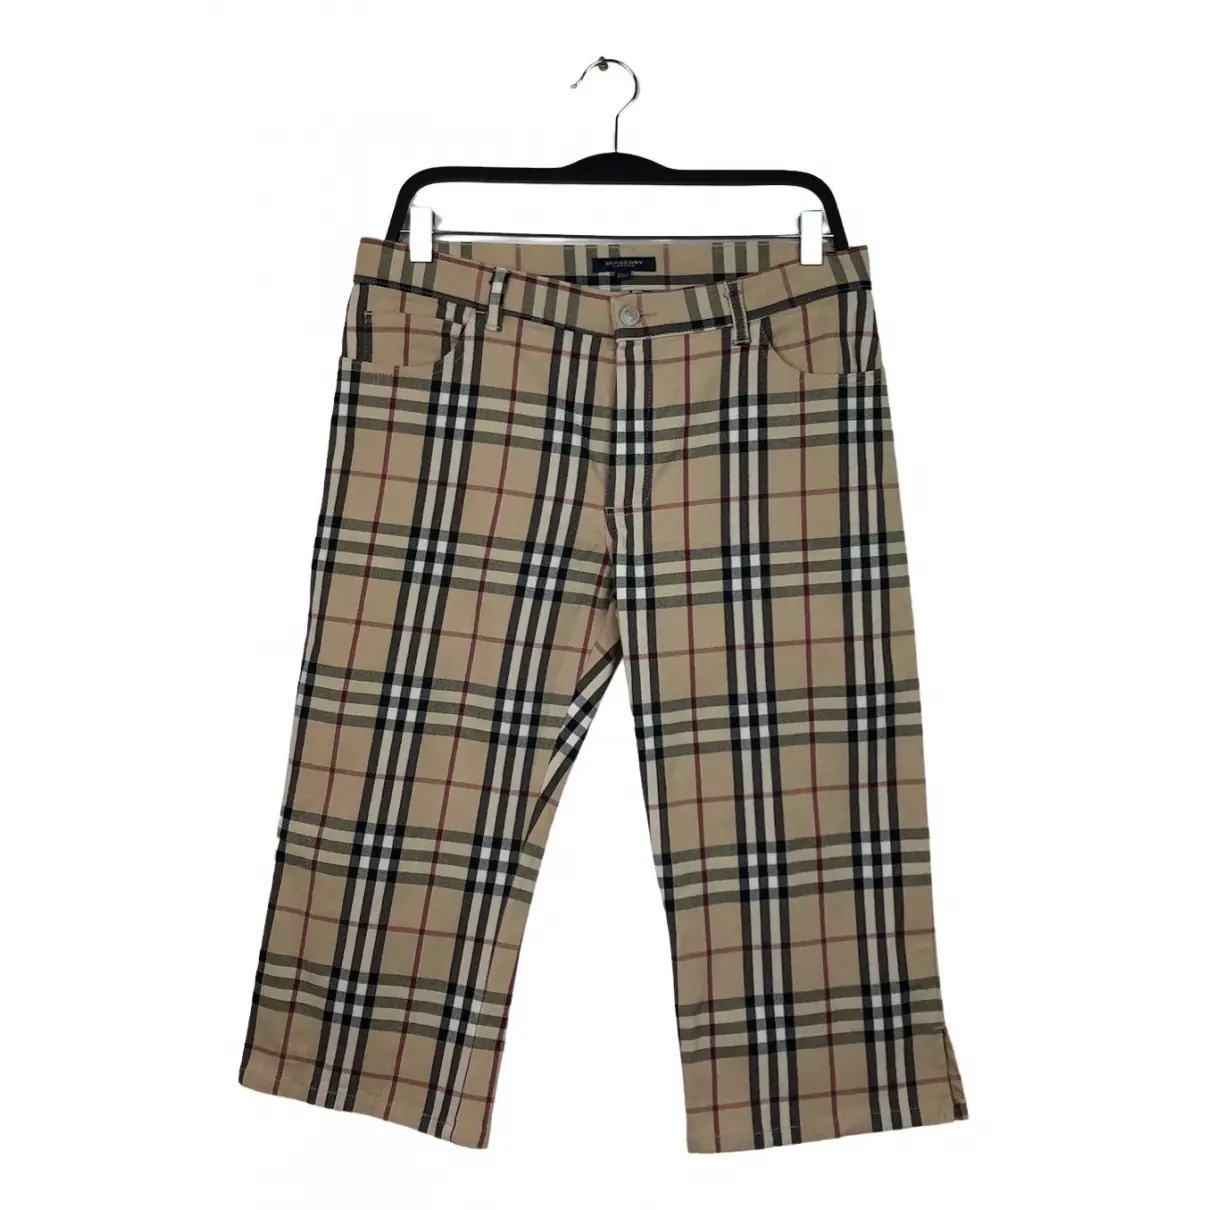 Carot pants Burberry - Vintage